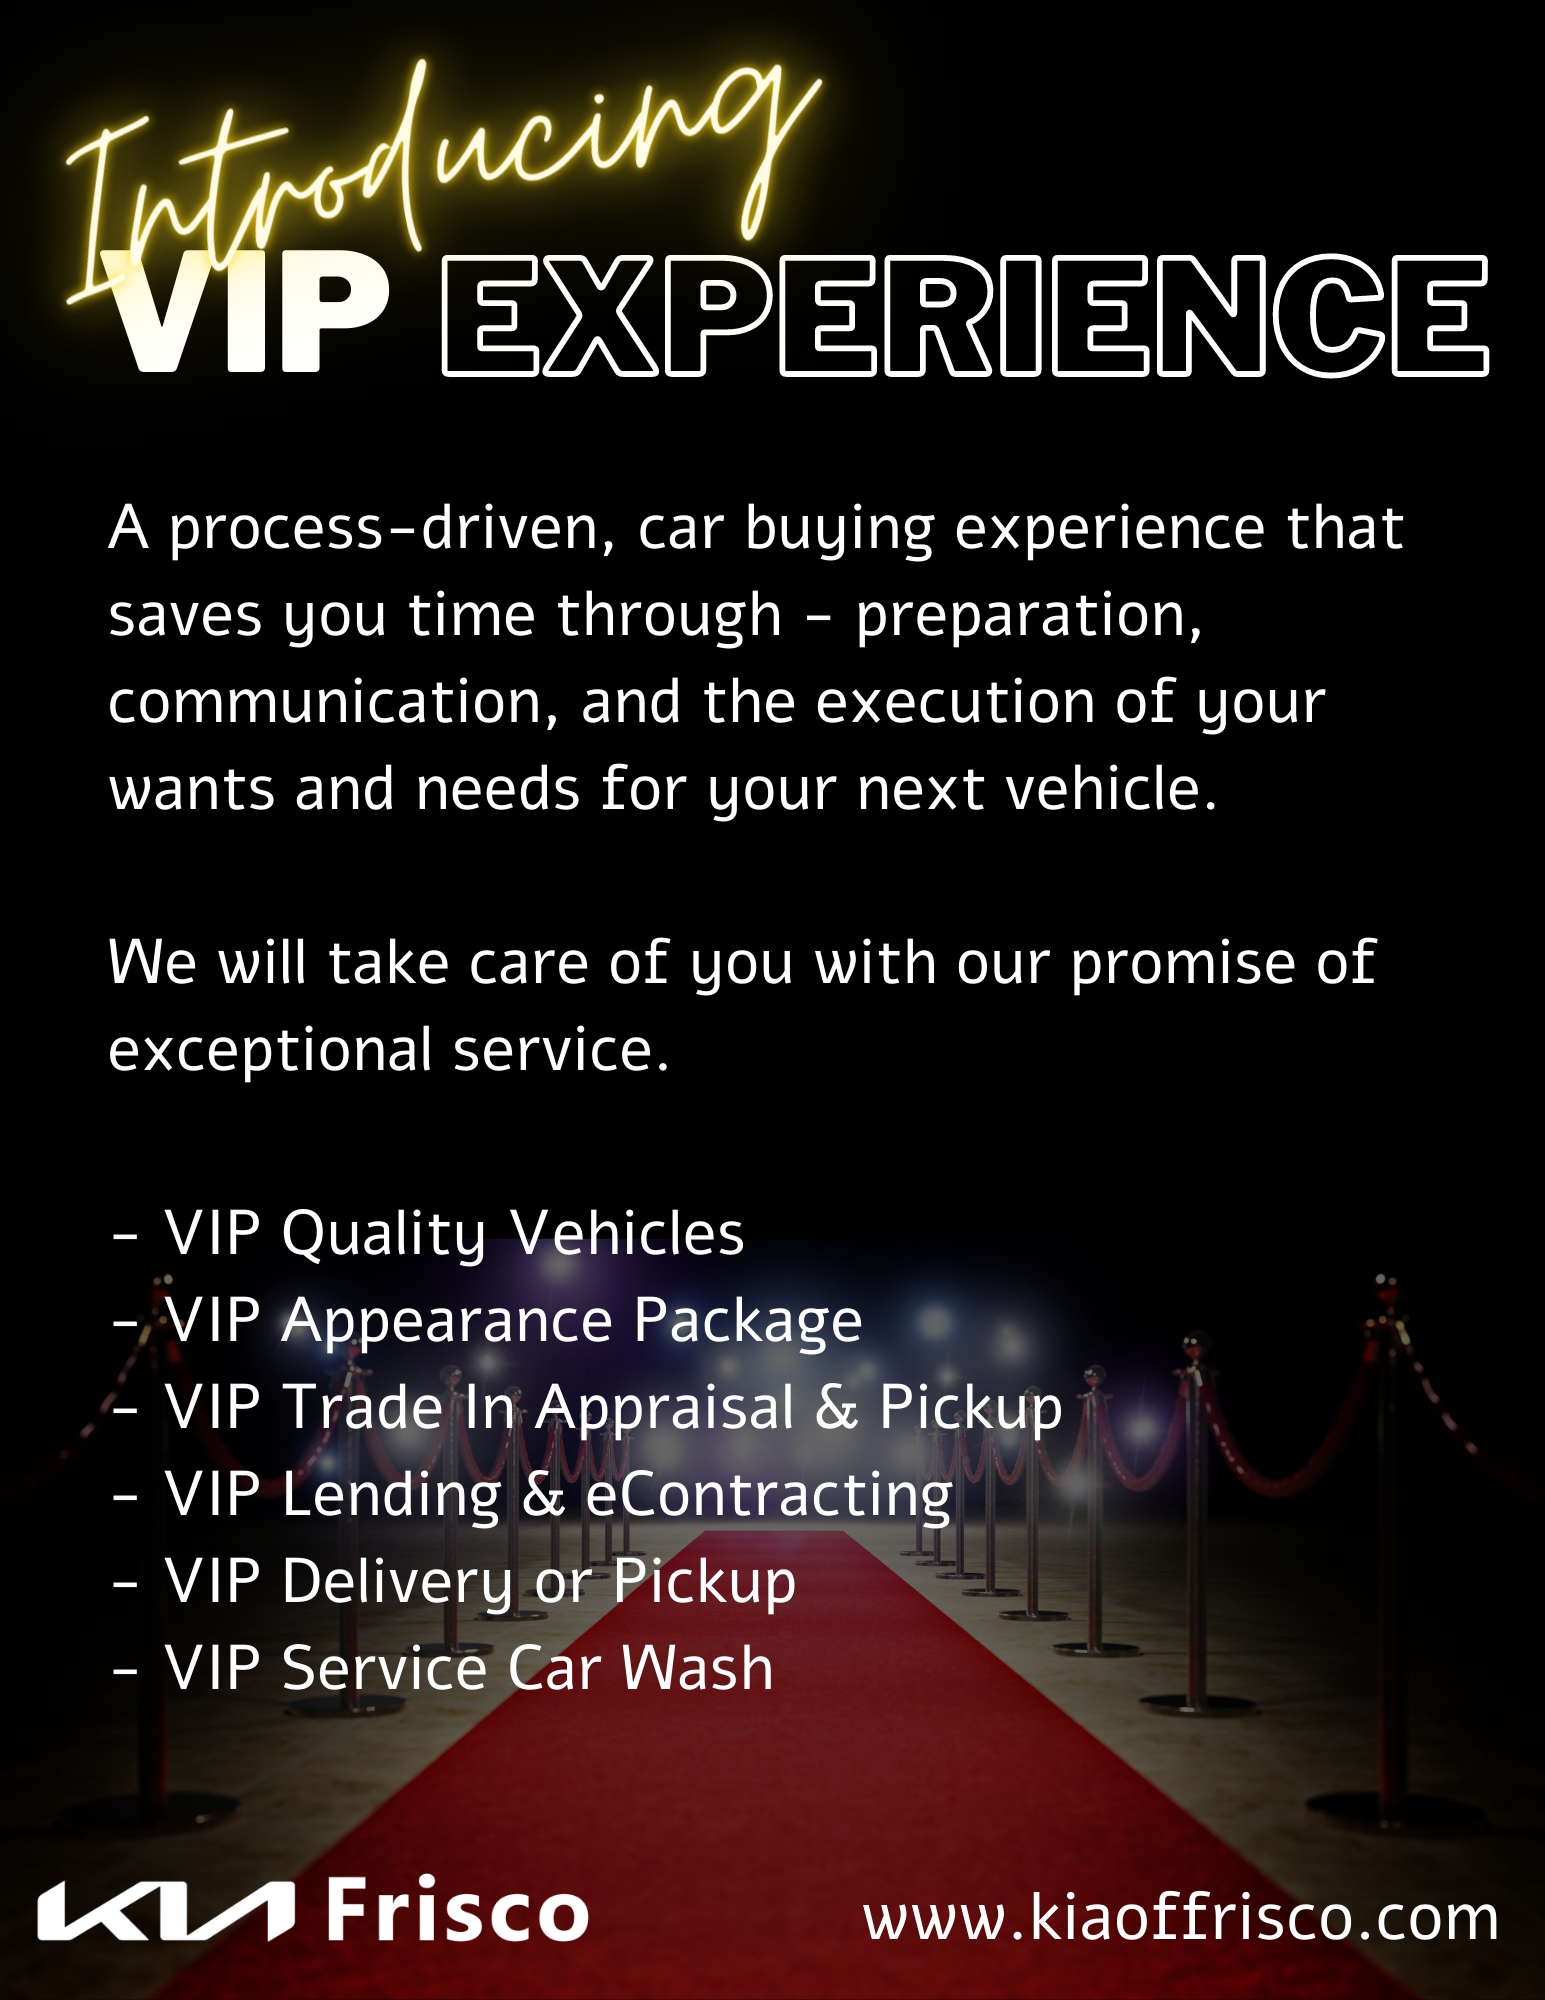 Kia VIP Experience 
Promise